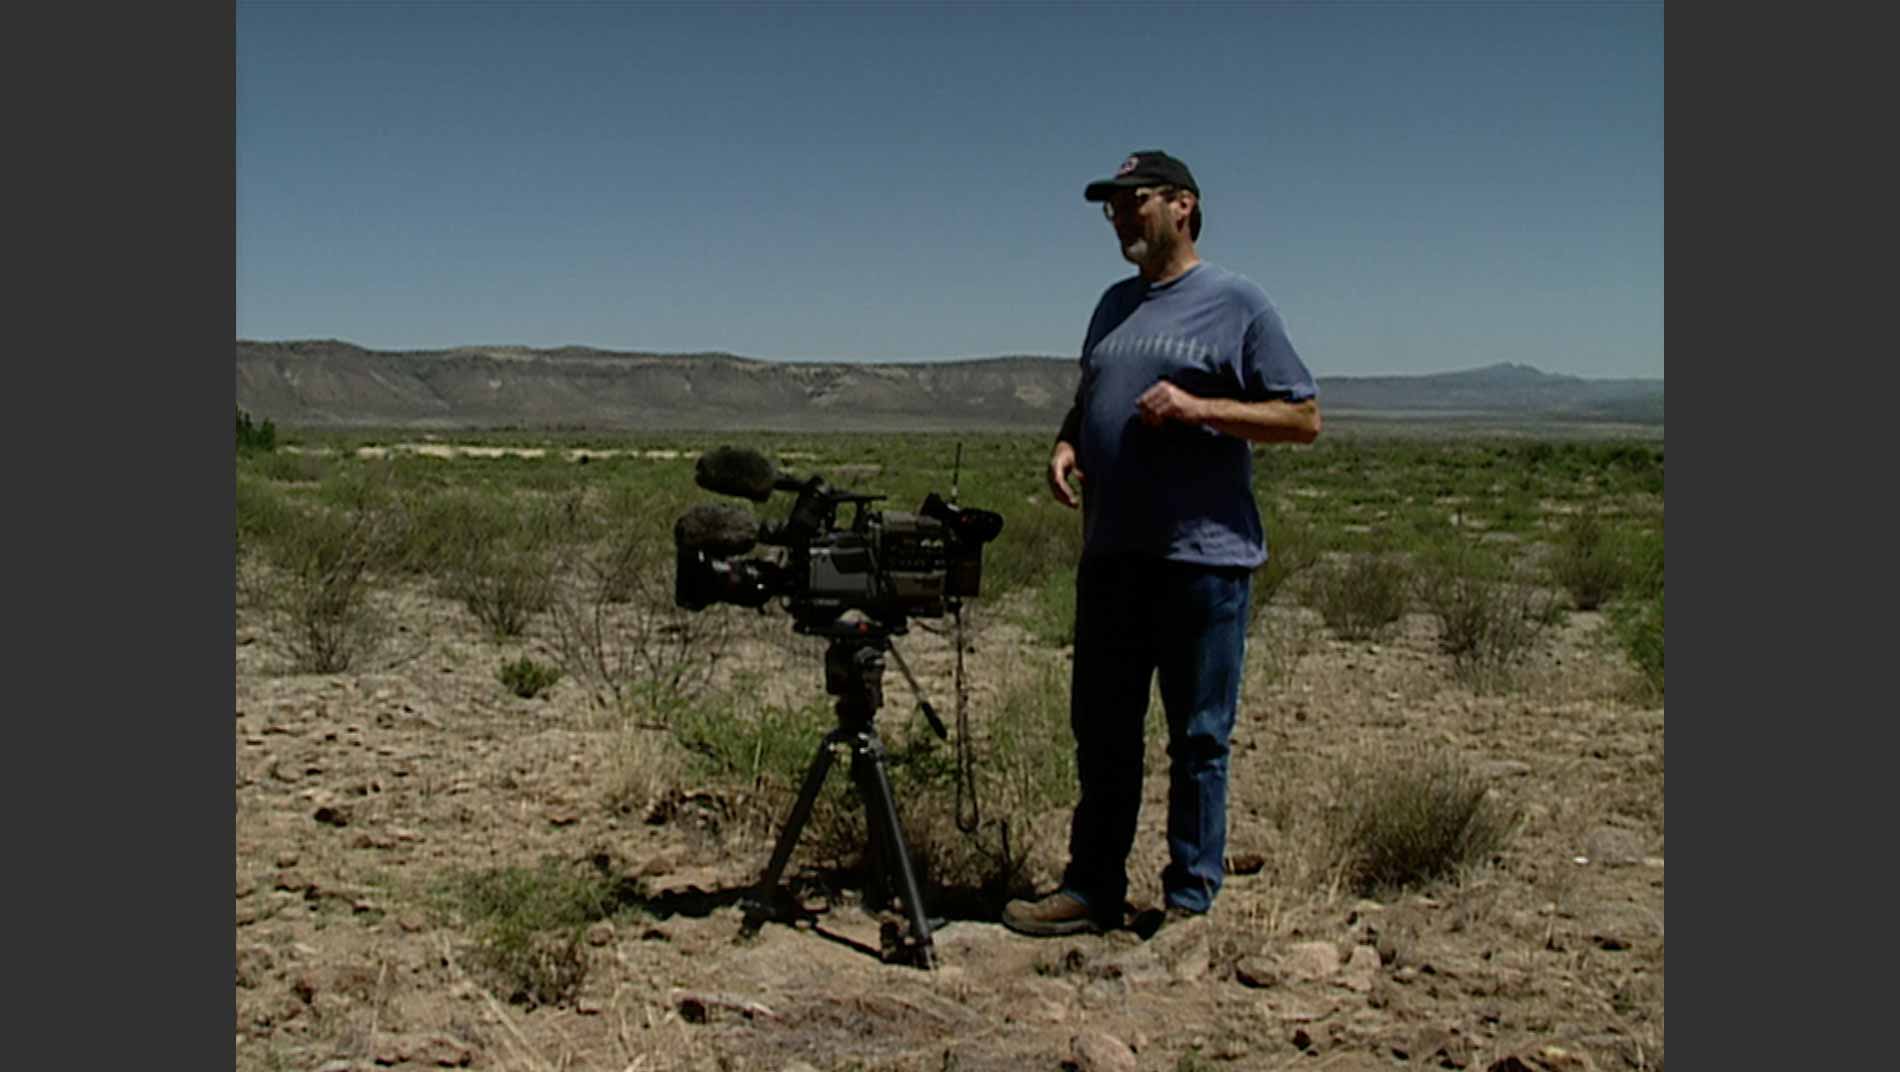 Mark Thurman in the Trans-Pecos shooting desert survival tips.